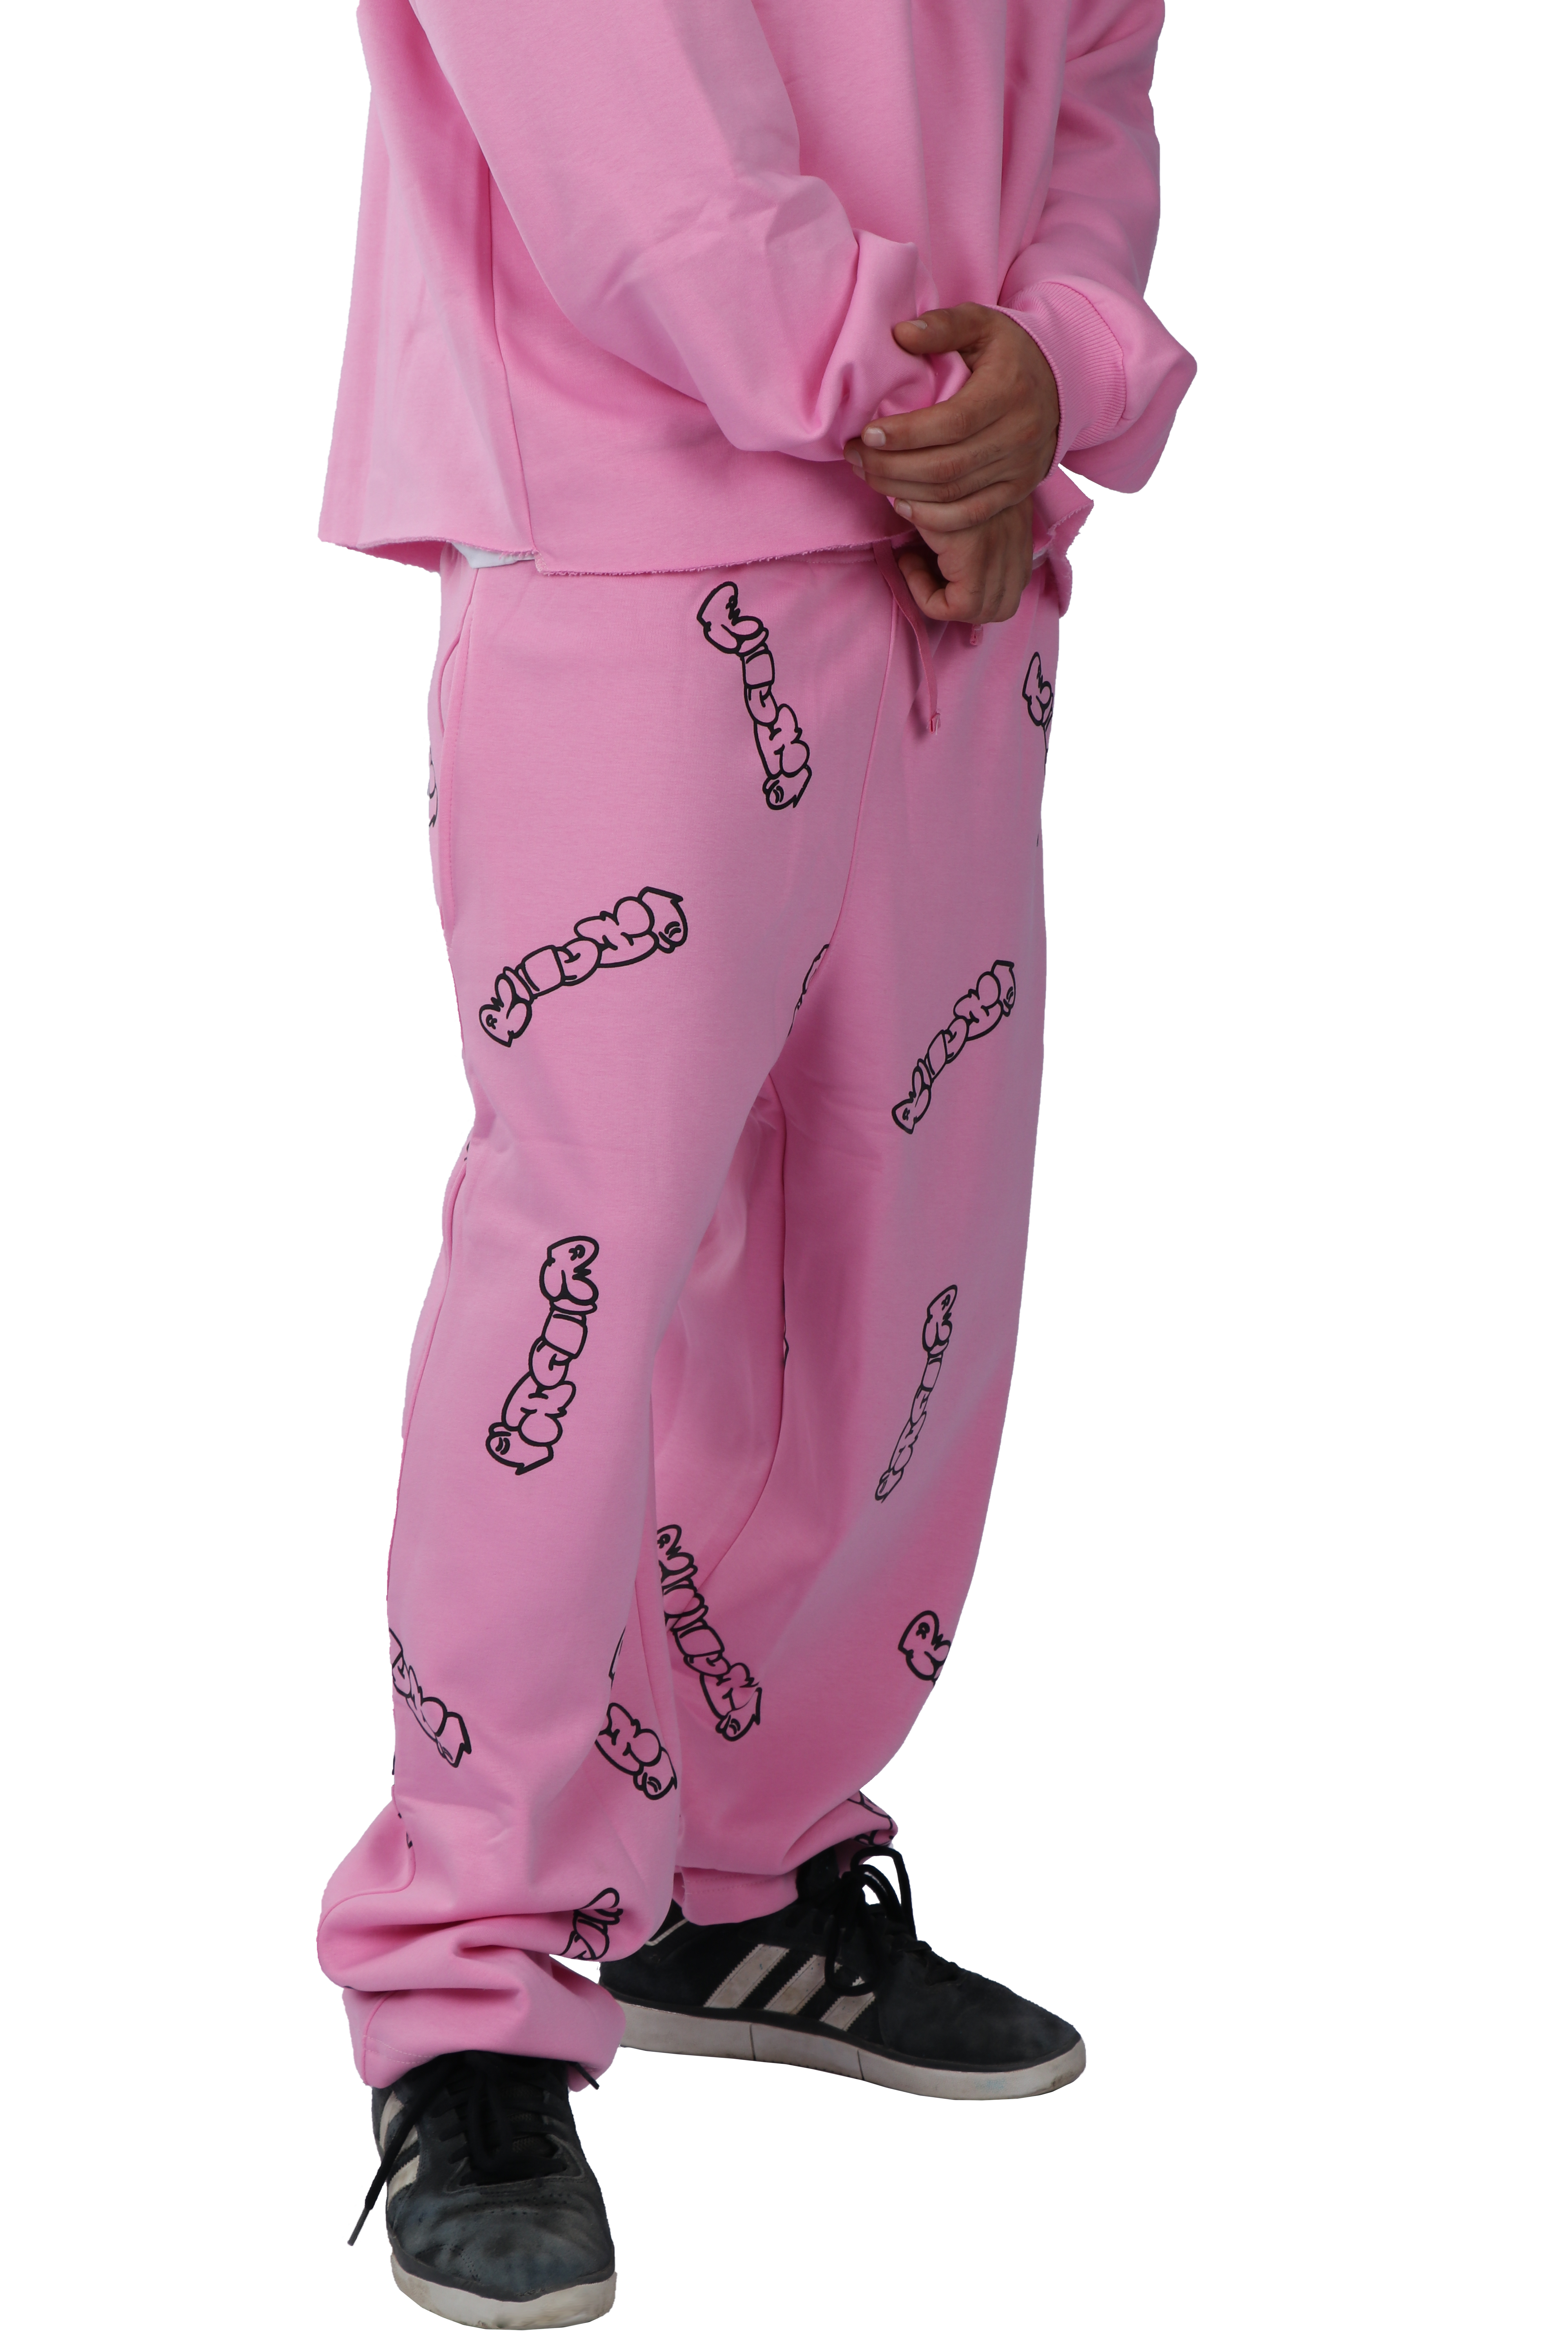 Patterned Pink Richa Sweatpants